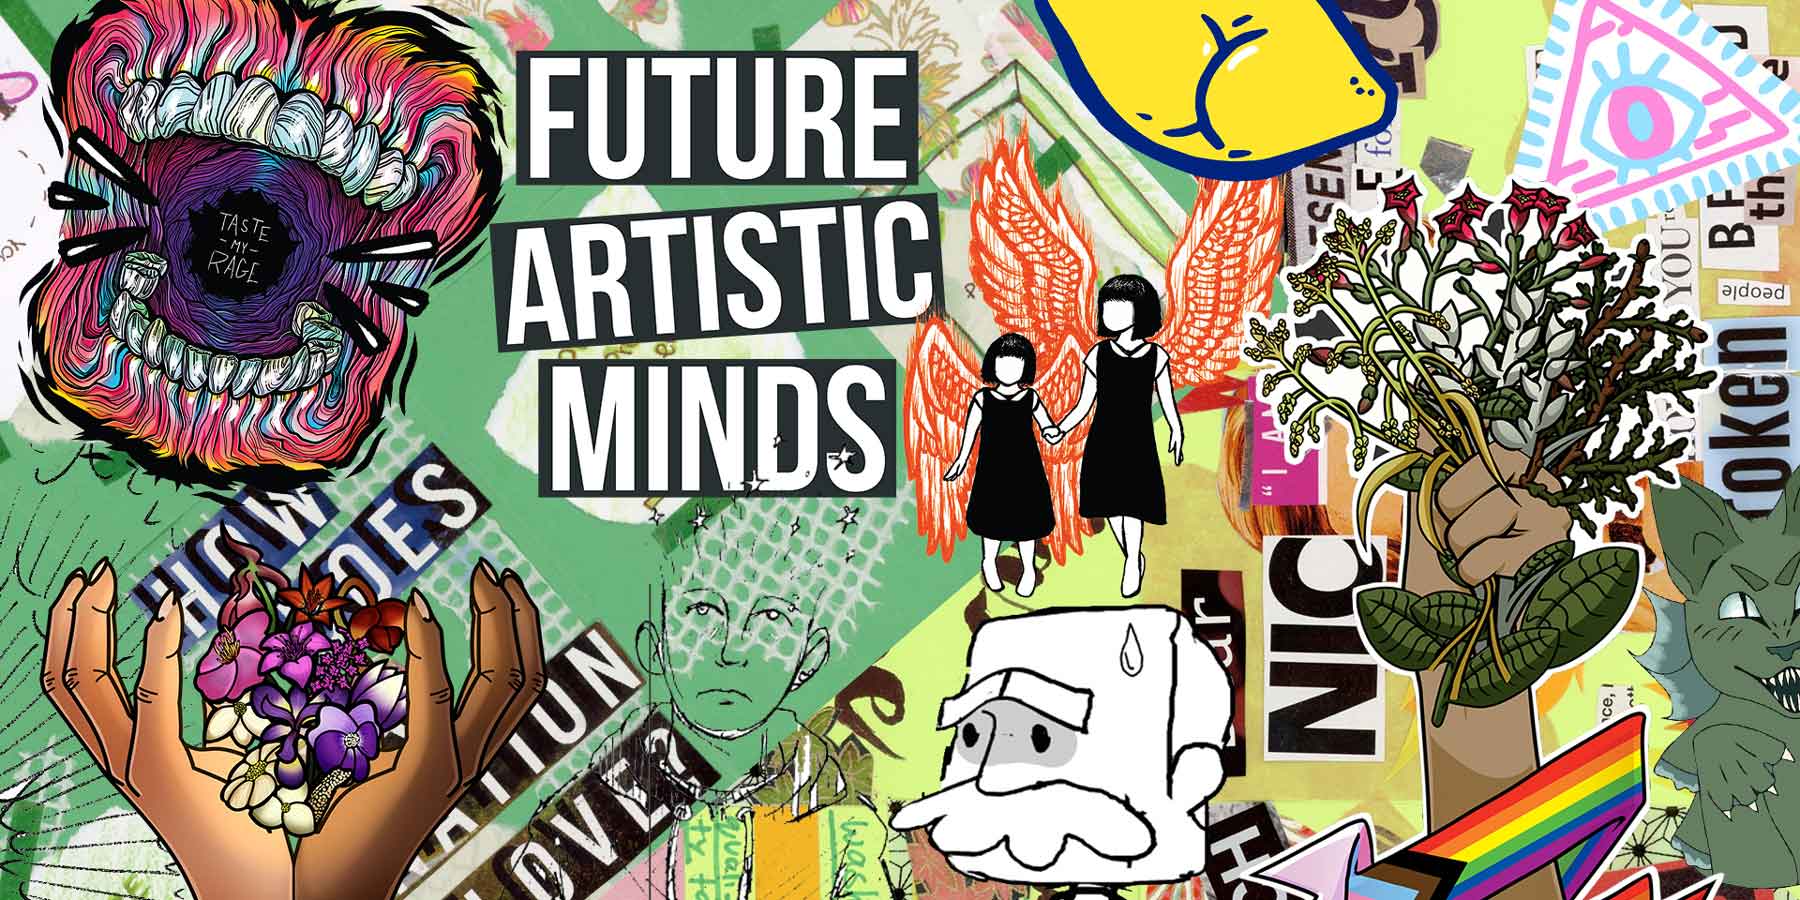 Future Artistic Minds / Chosen fam(ily)